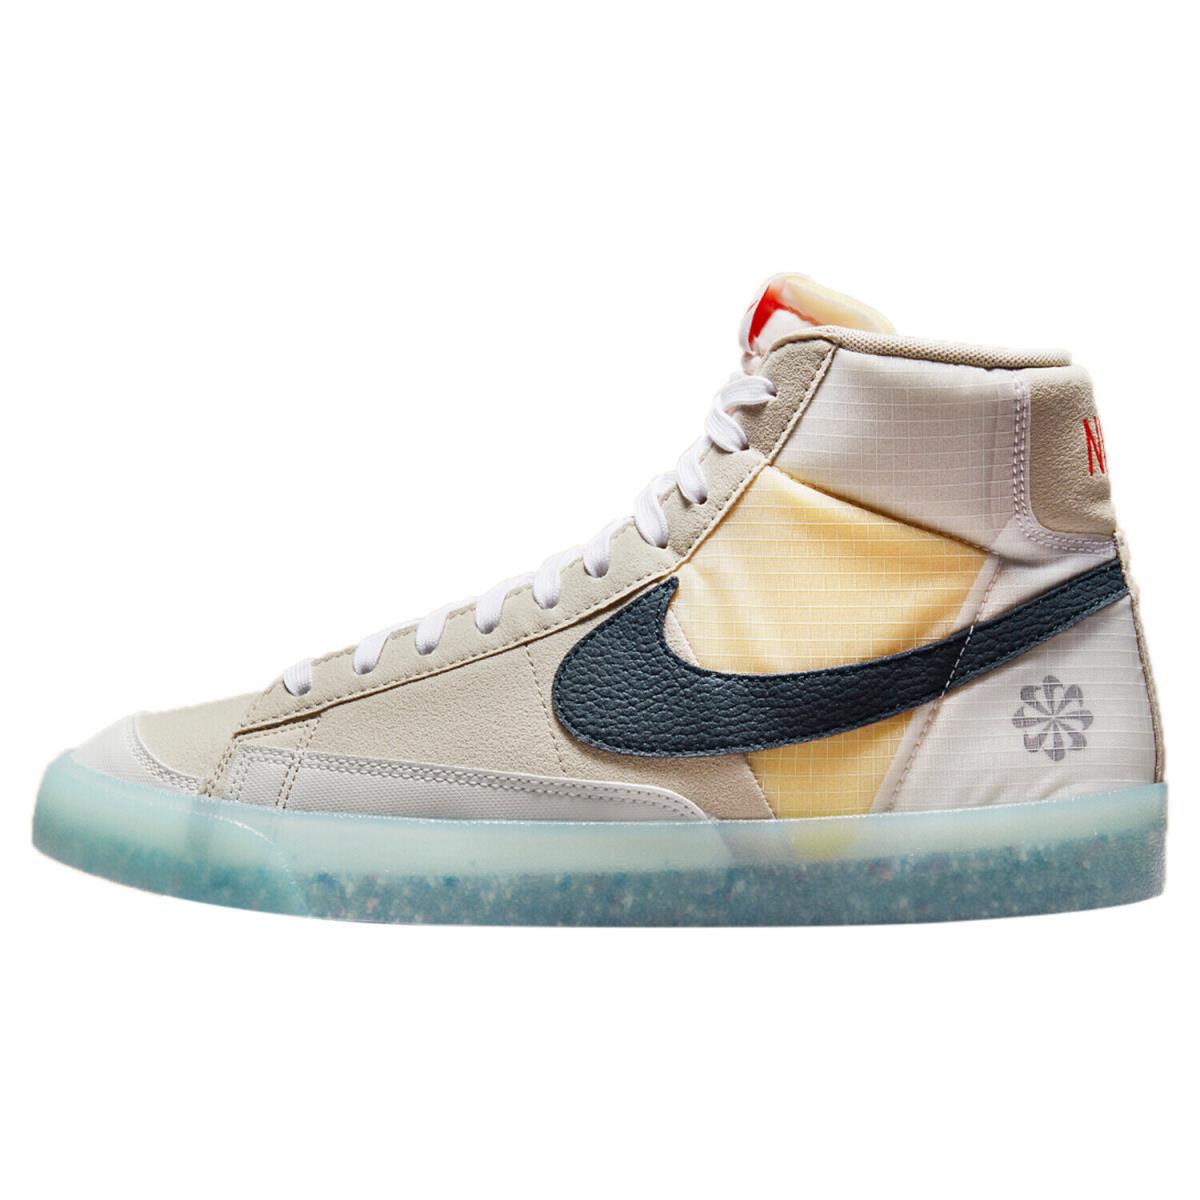 Nike Blazer Mid `77 Move To Zero Mens DH4505-200 Cream II Navy Shoes Size 9.5 - Cream II/Orange/Glacier Ice/Armory Navy